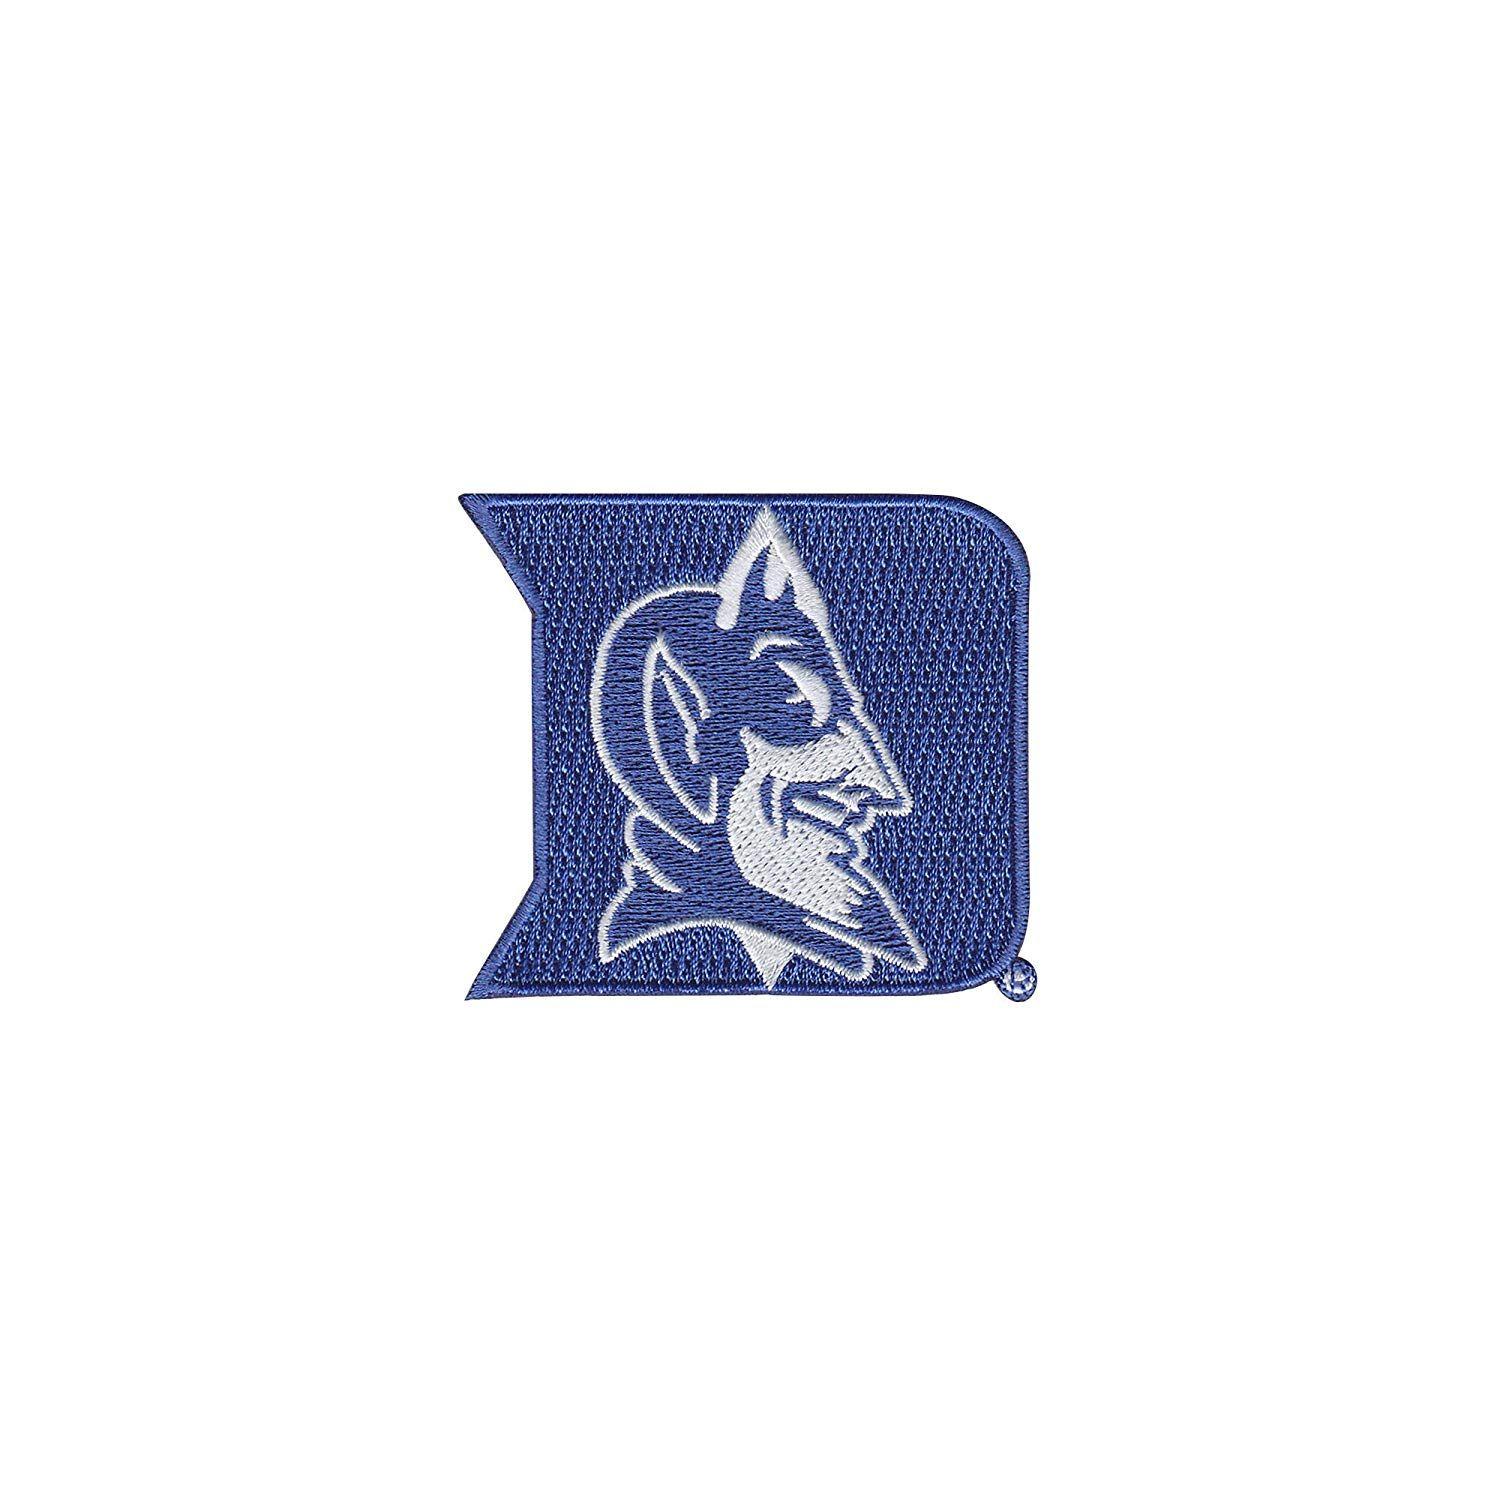 Blue Devils Logo - Amazon.com: Tervis 1060834 Duke Blue Devils Logo Tumbler with Emblem ...